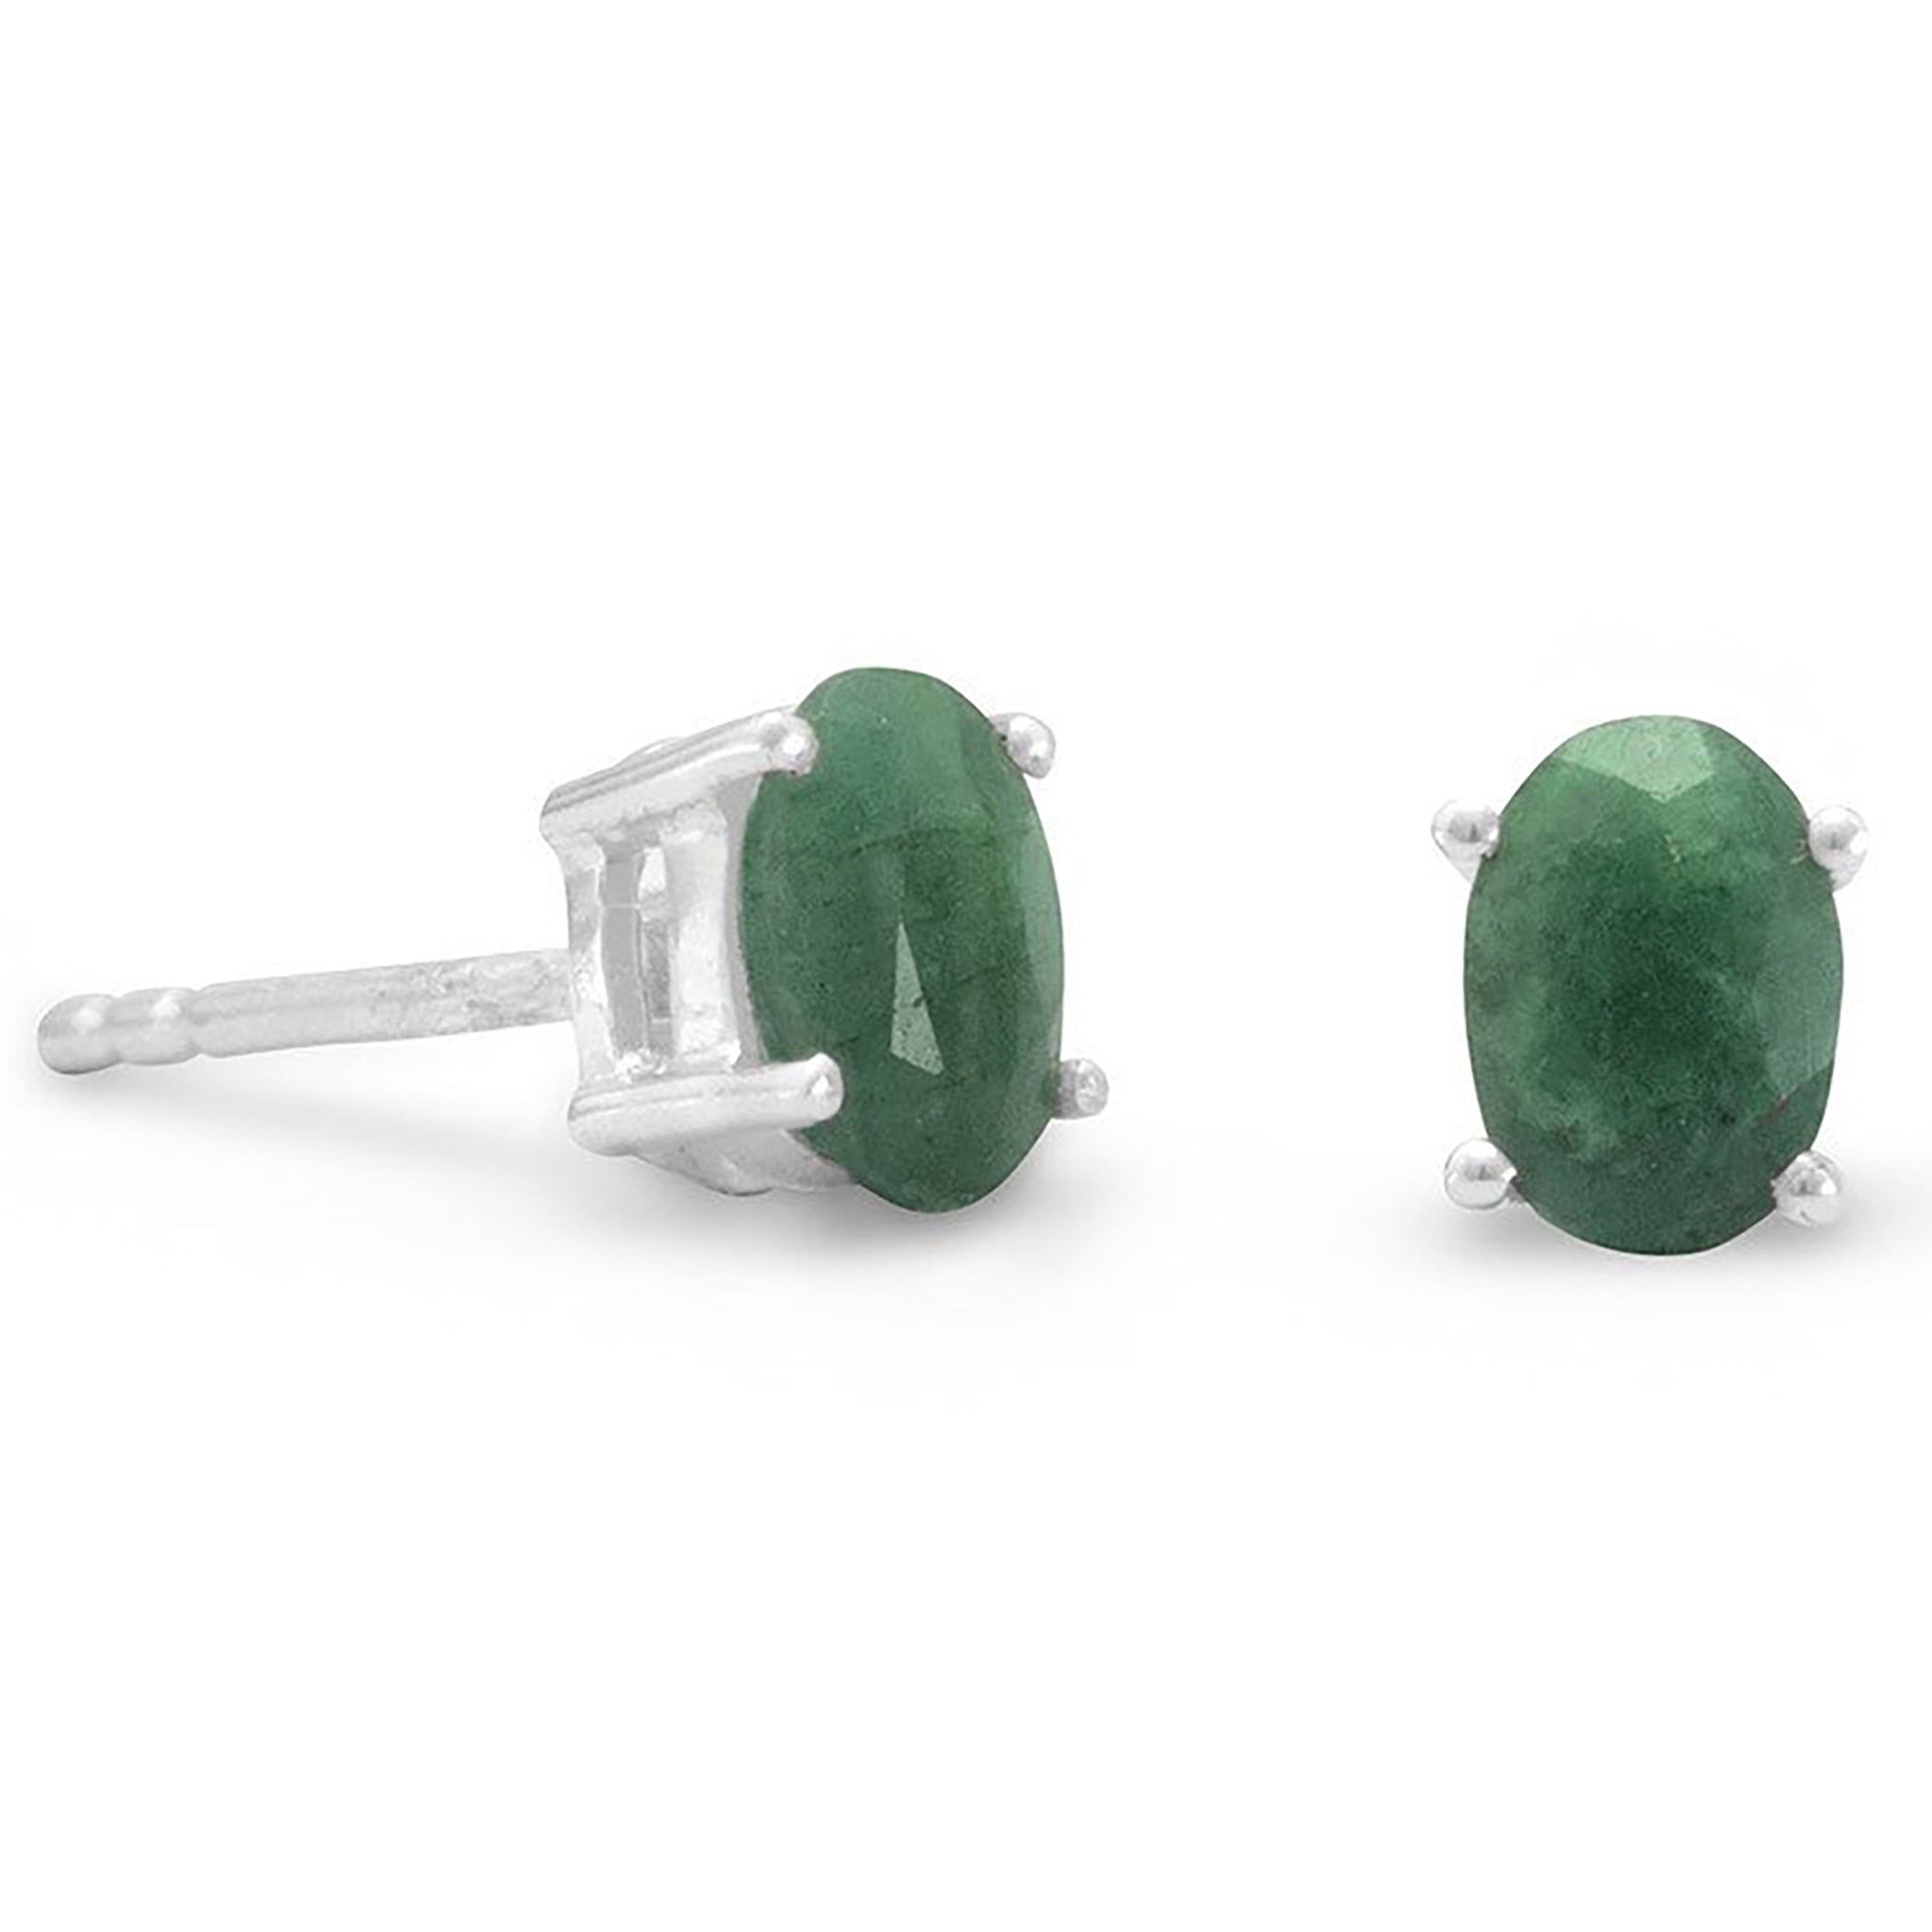 Dyed Emerald Beryl Earrings